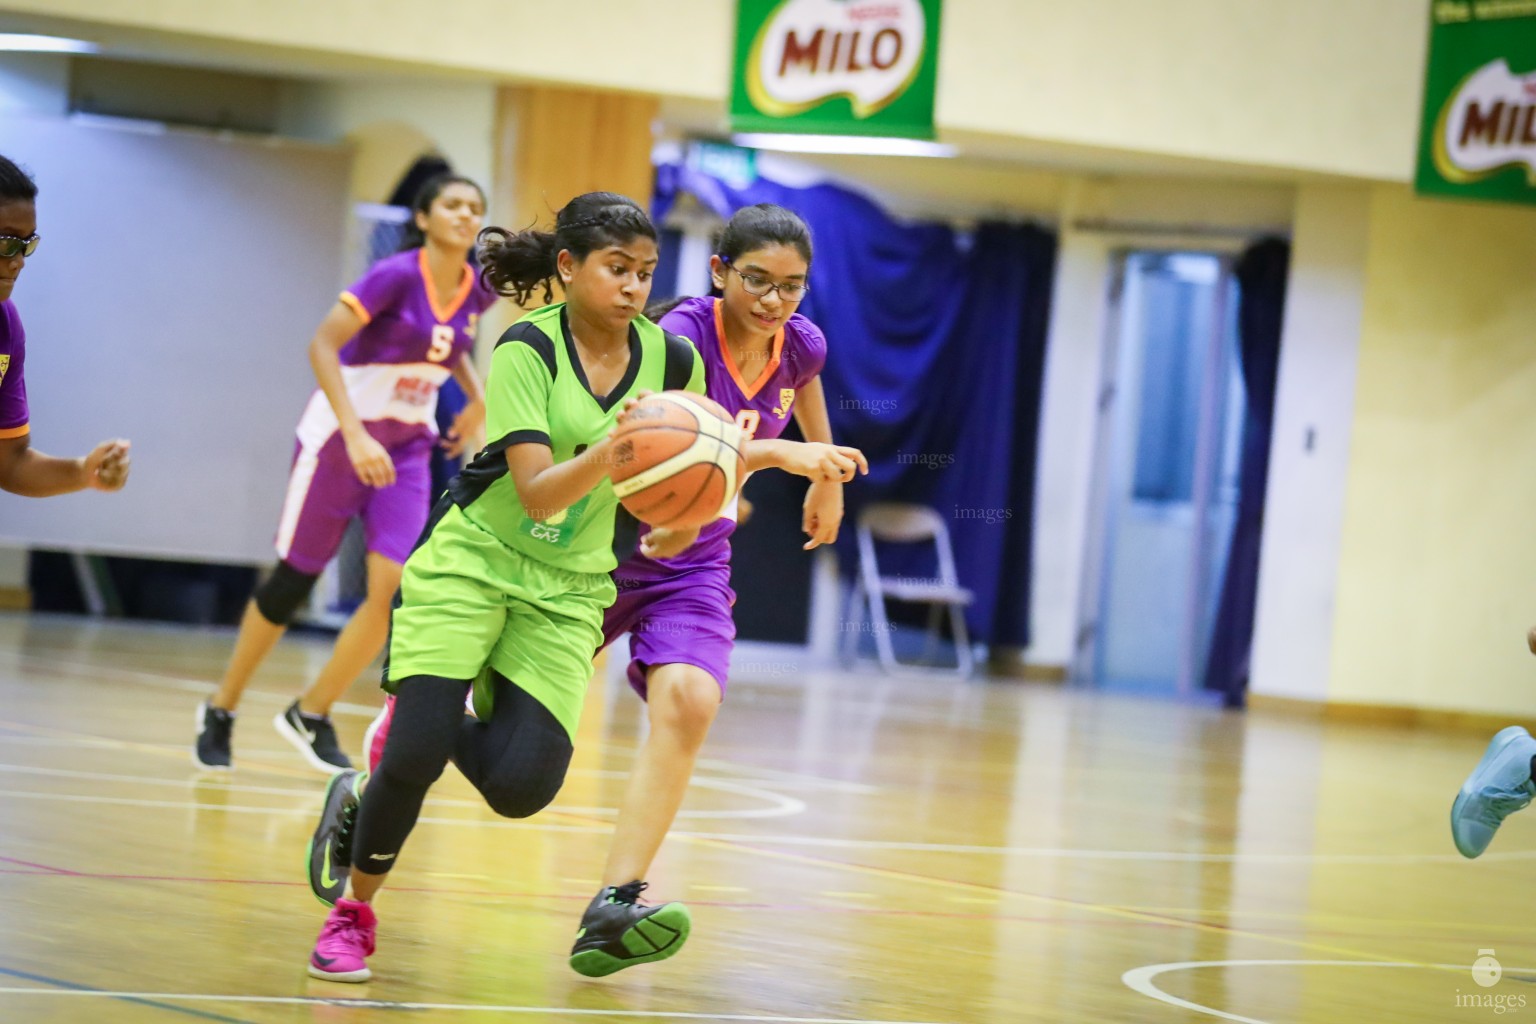 MILO Interschool Basket Tournament 2018 (U16 Girls Semi Final) Kalaafaanu vs GIS